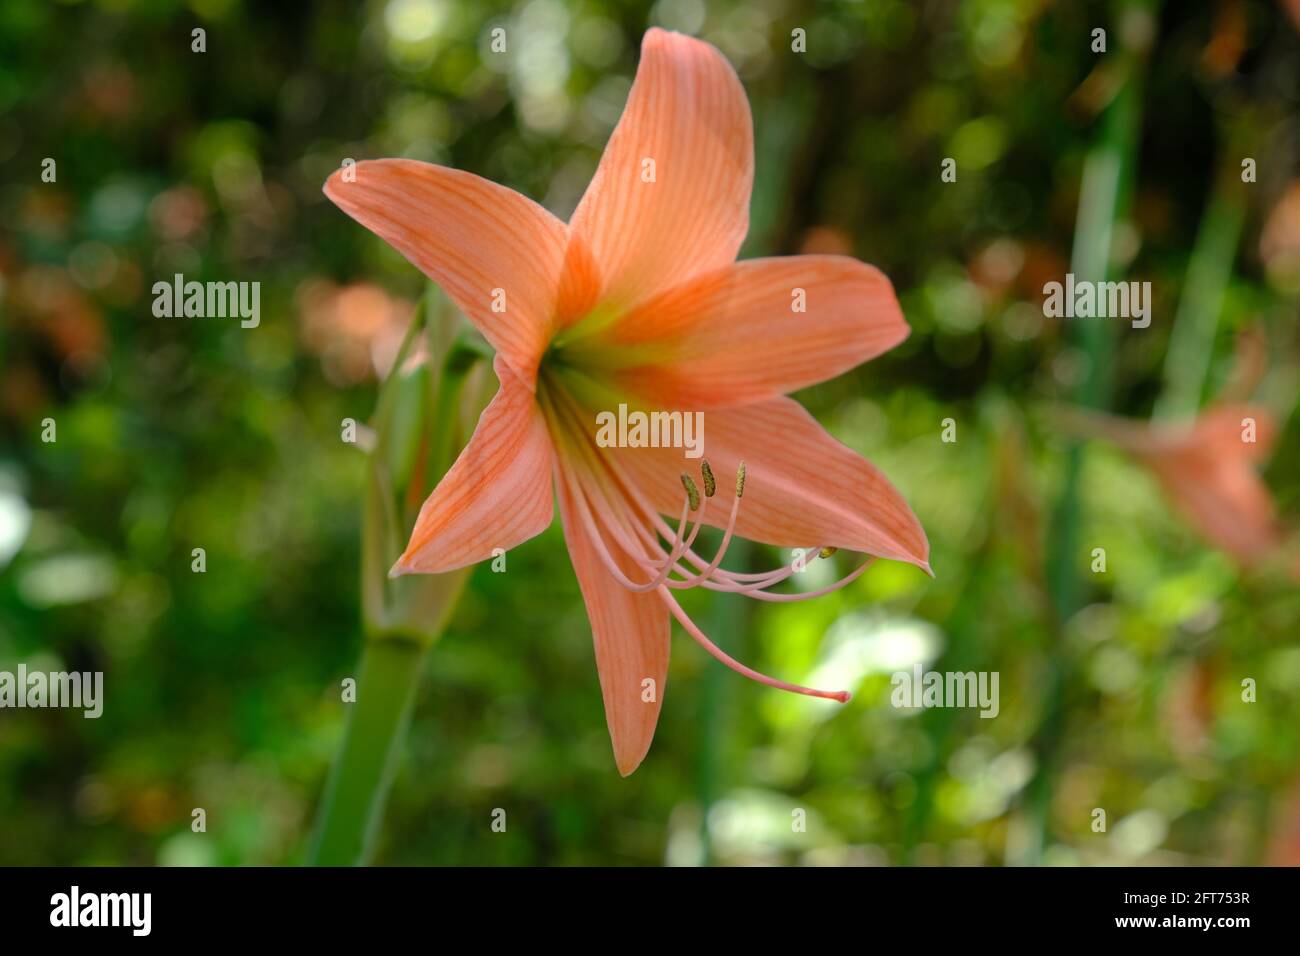 Indonesia Anambas Islands - Amaryllis bloom - Amaryllis belladonna Stock Photo